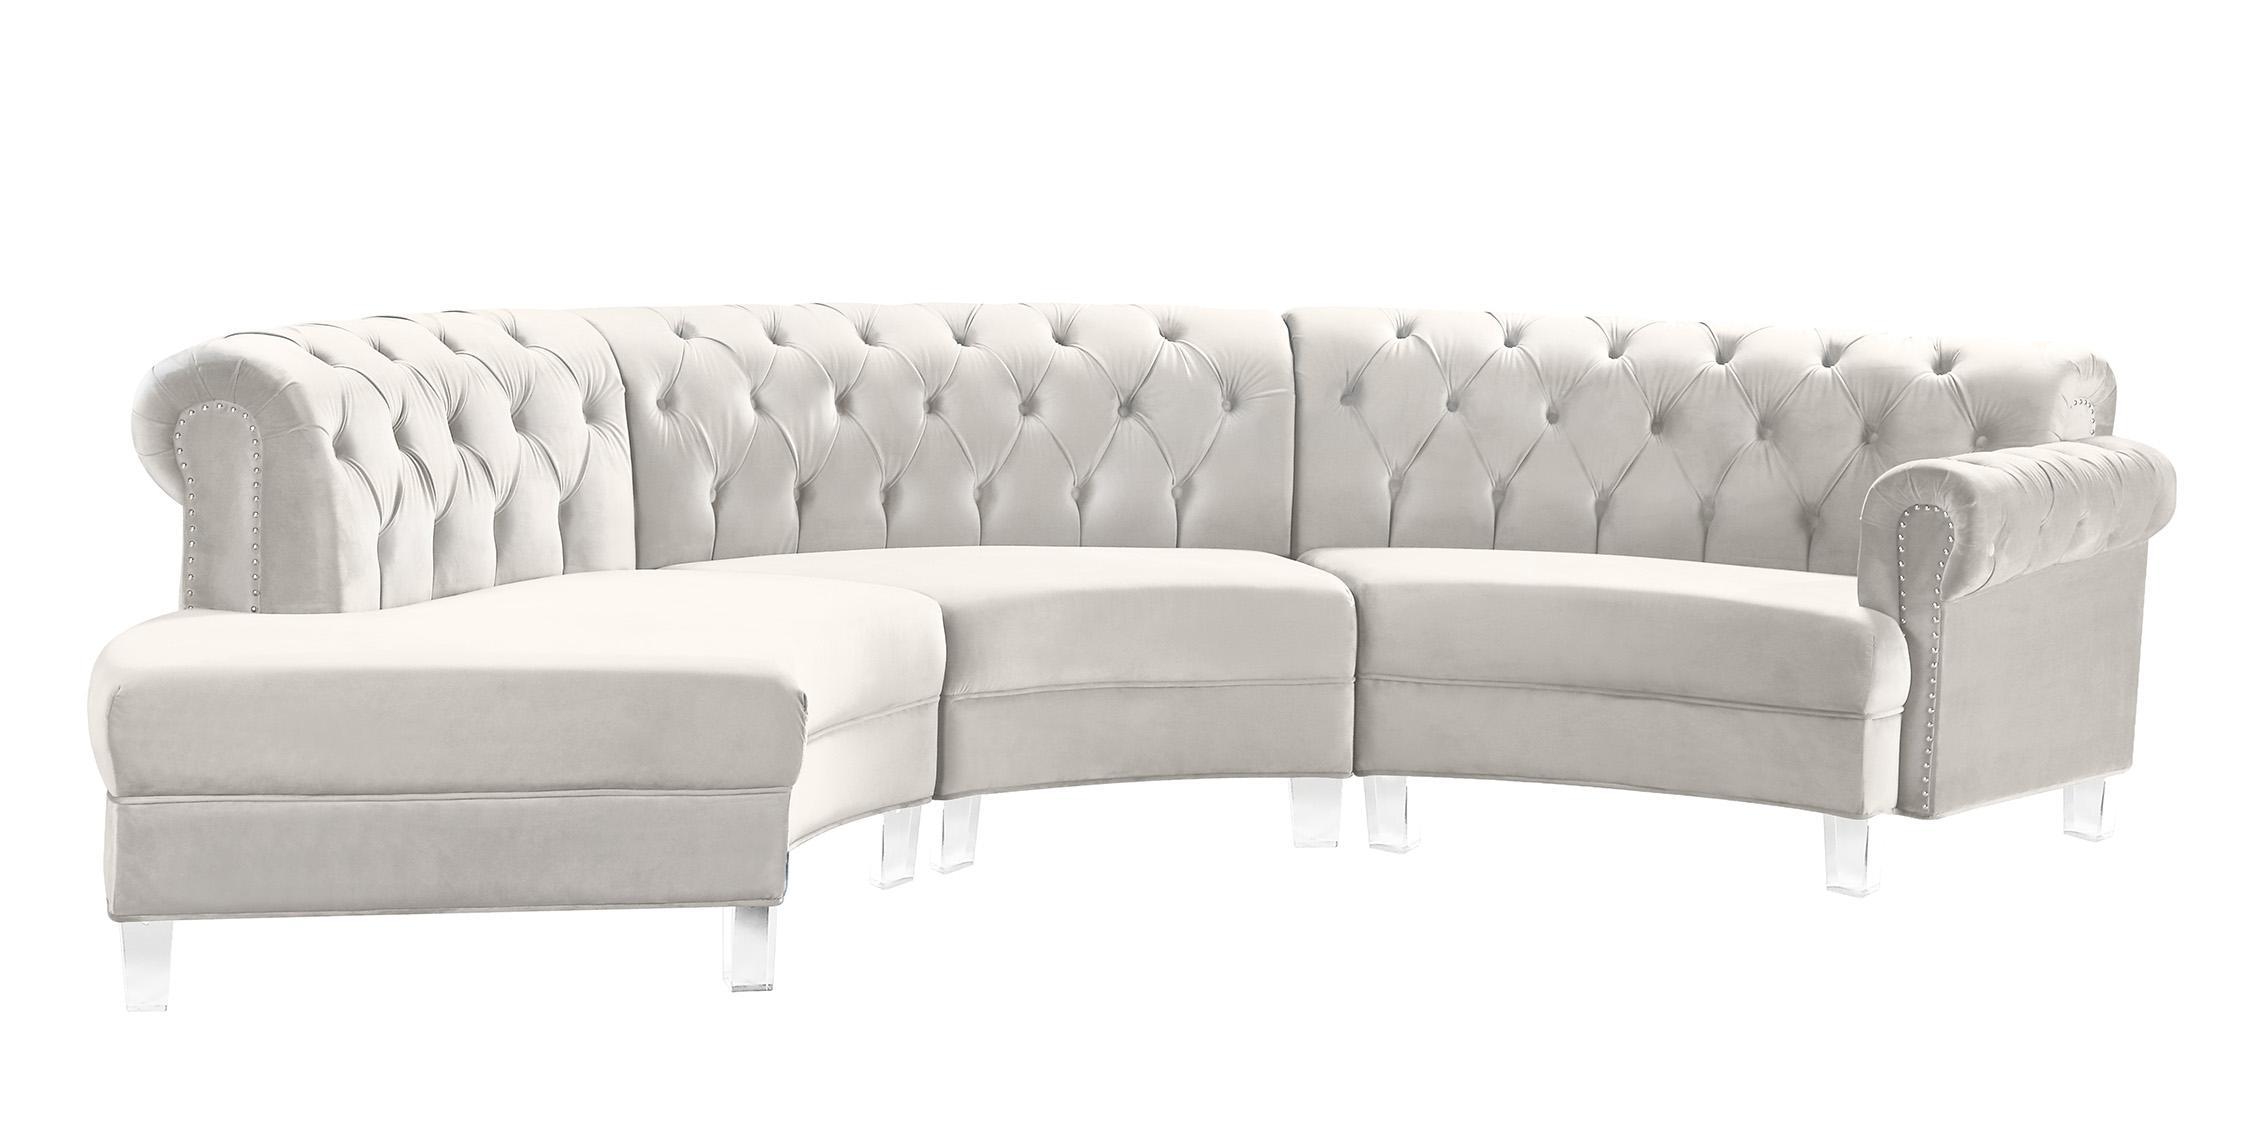 Contemporary, Modern Sectional Sofa ANABELLA 697Cream-3 697Cream-Sec-3PC in Cream Velvet